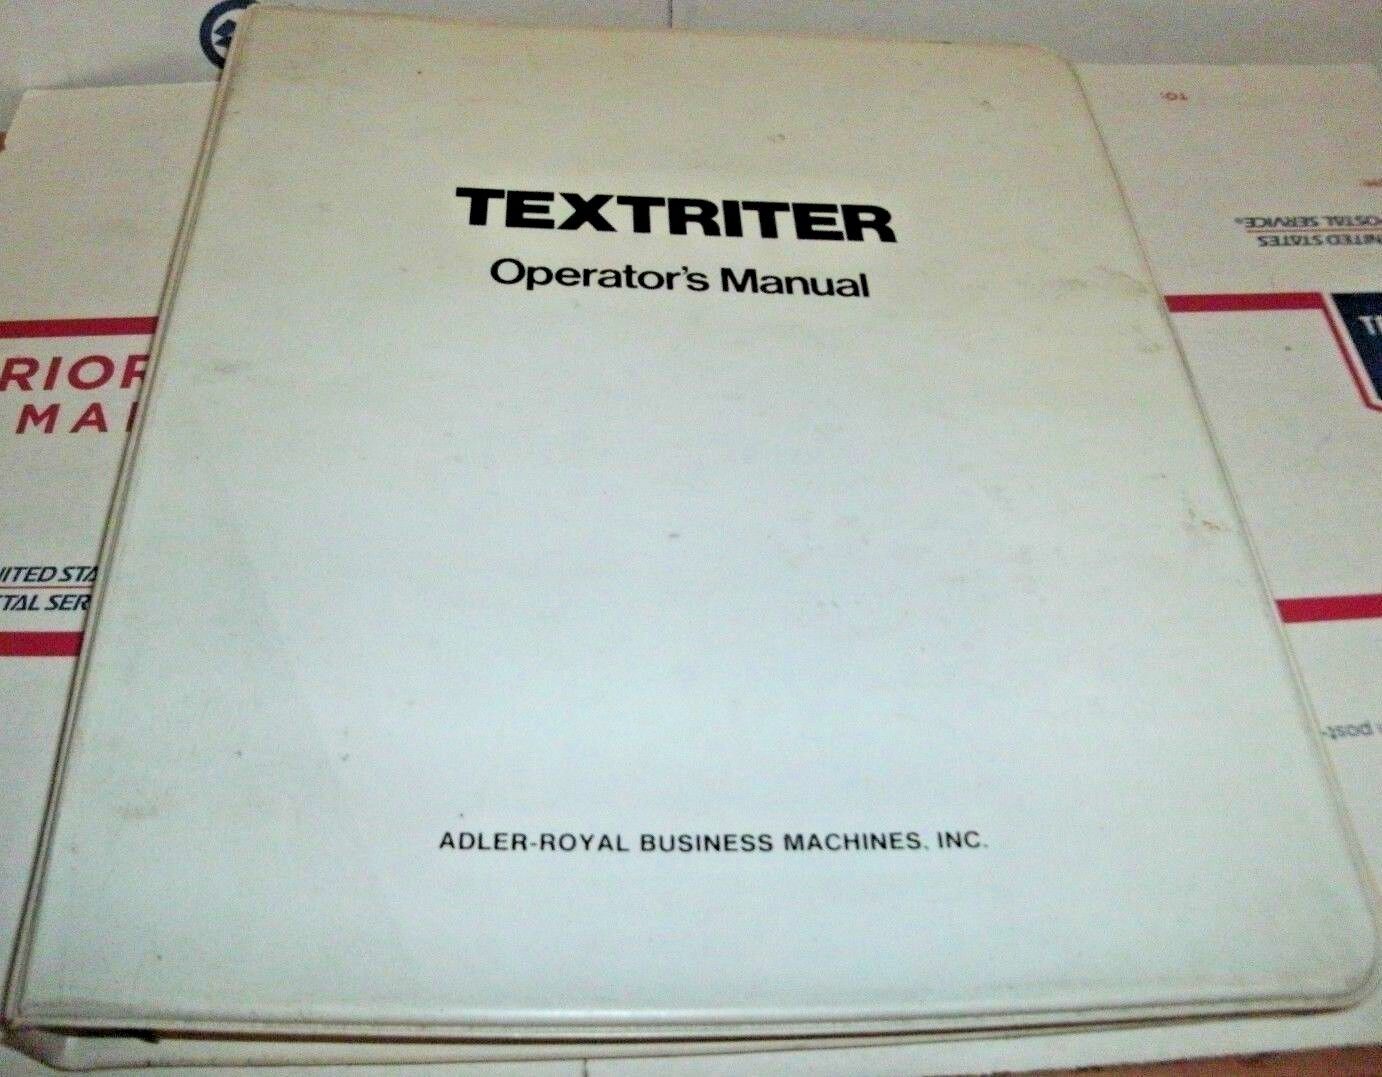 1983 TEXTWRITER OPERATORS Manual instruction Schematics + Adler Royal Interface